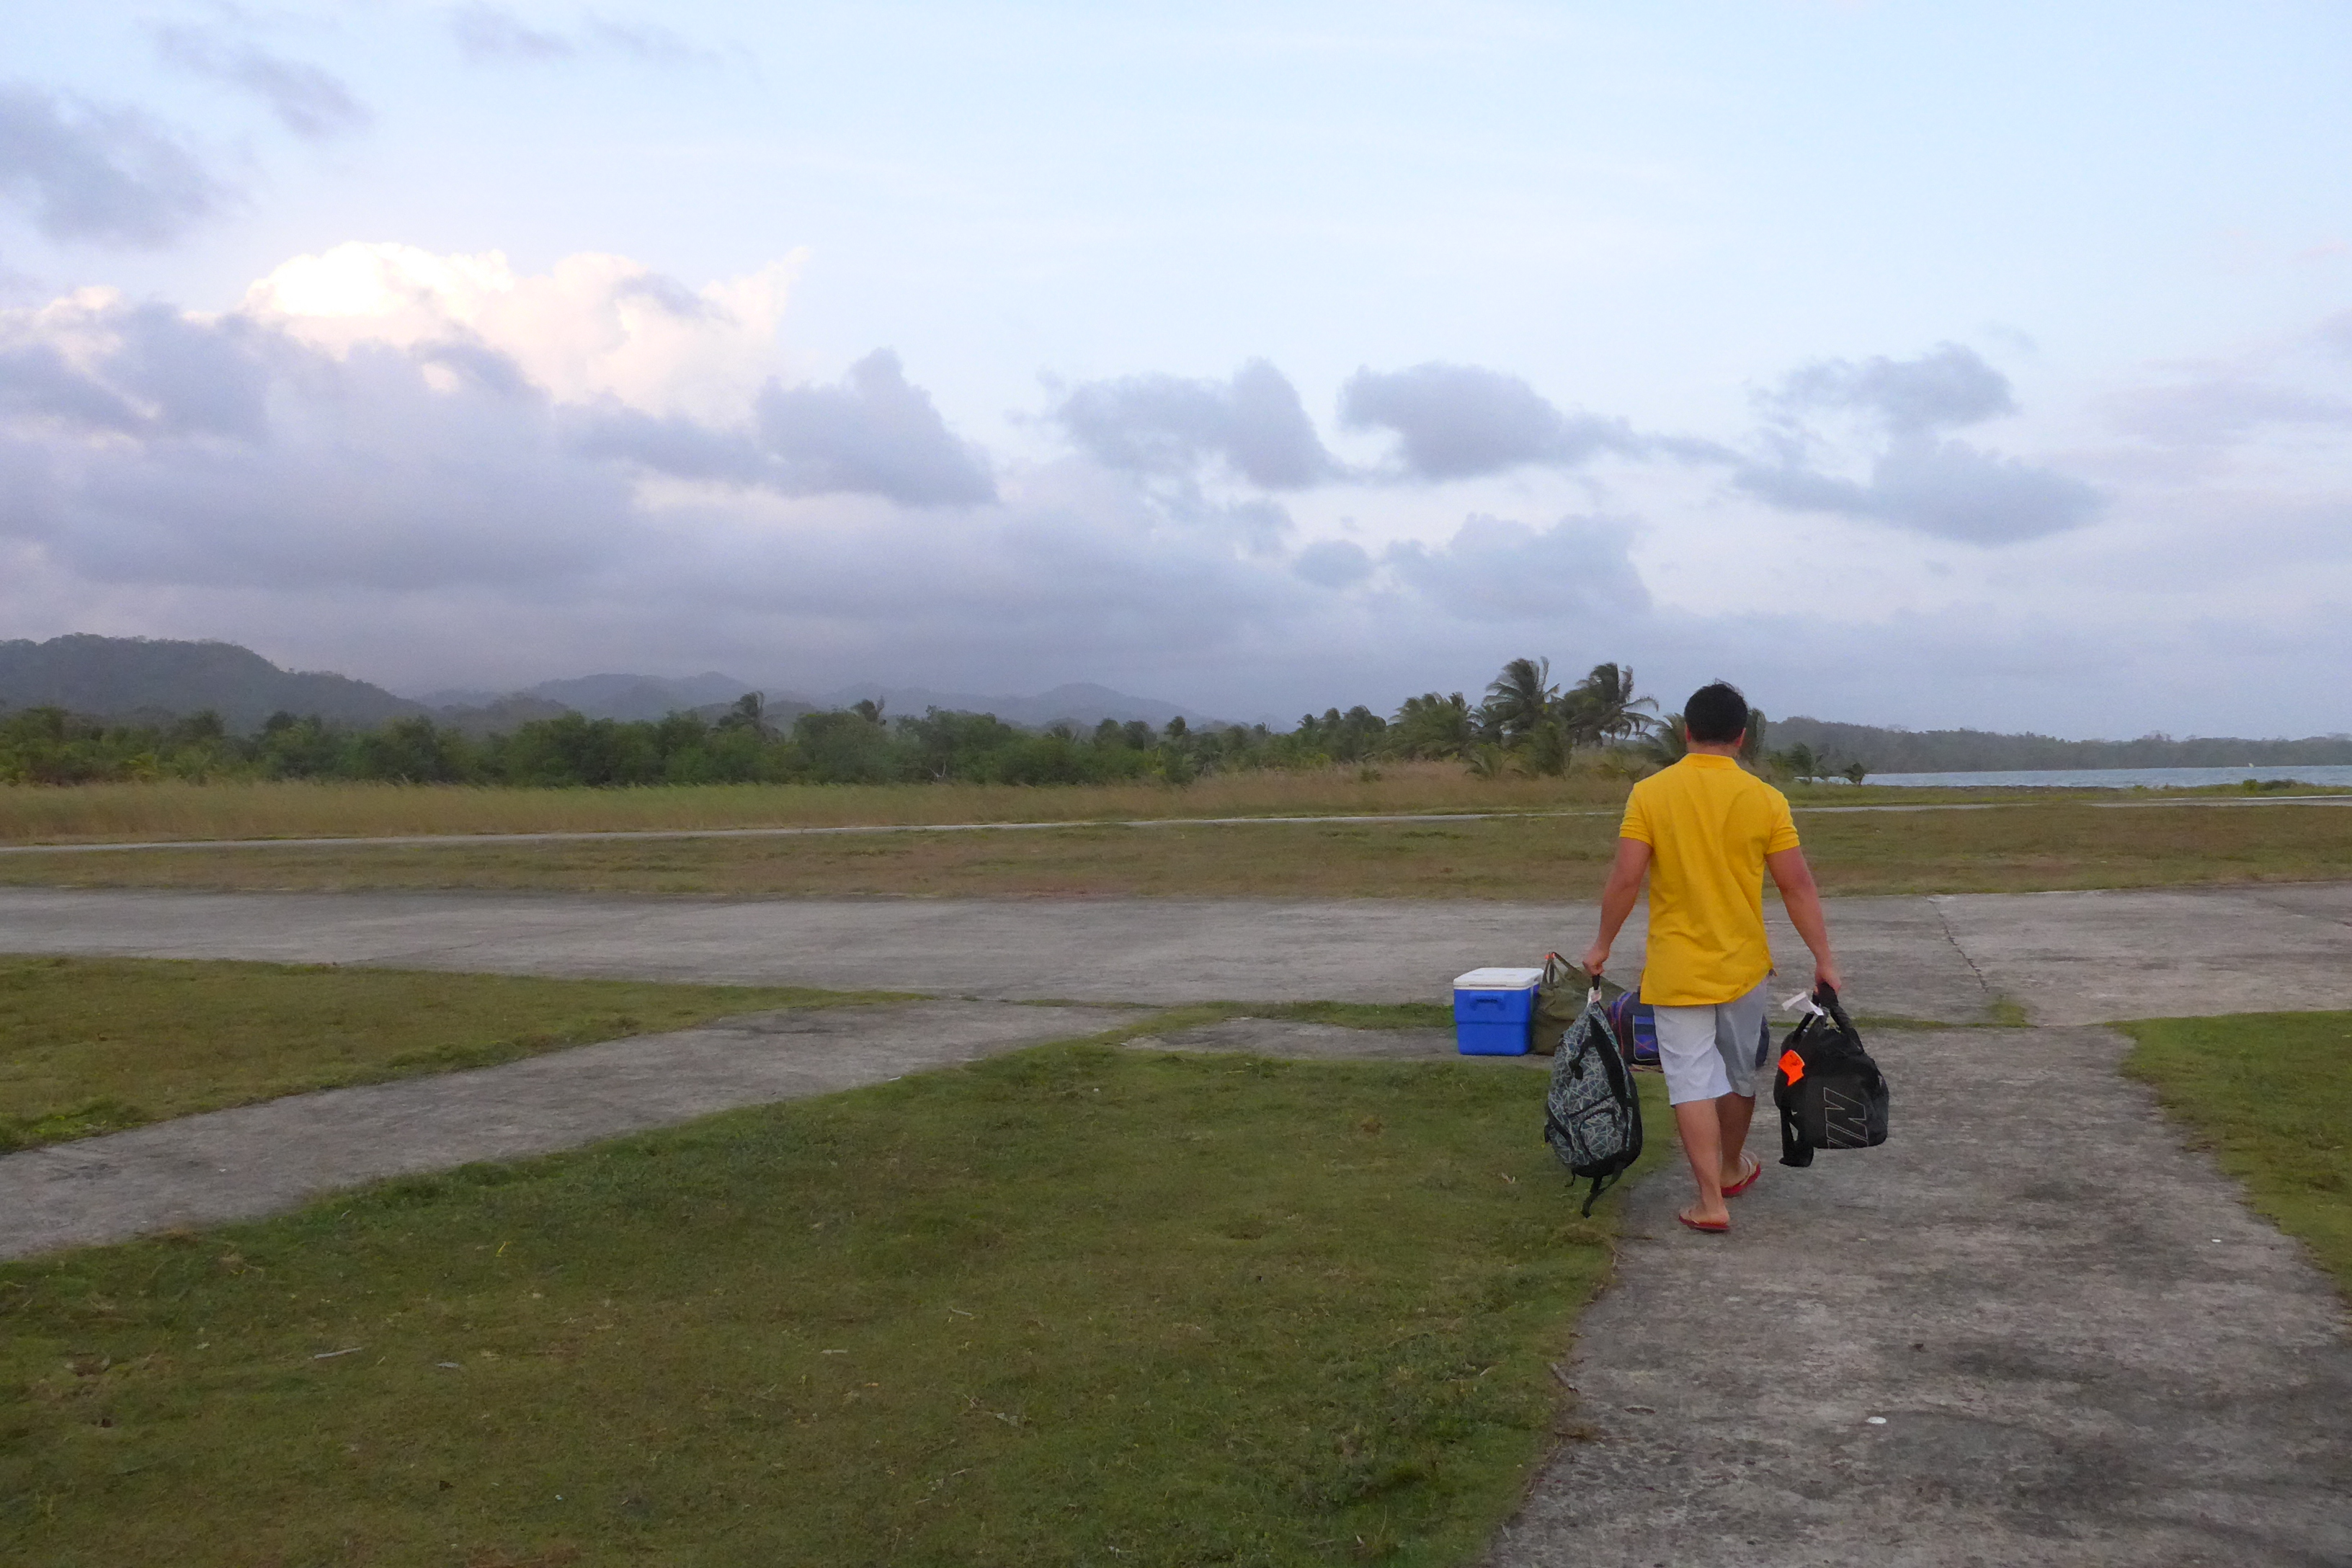 tarmac at Achutupu airport in Guna Yala